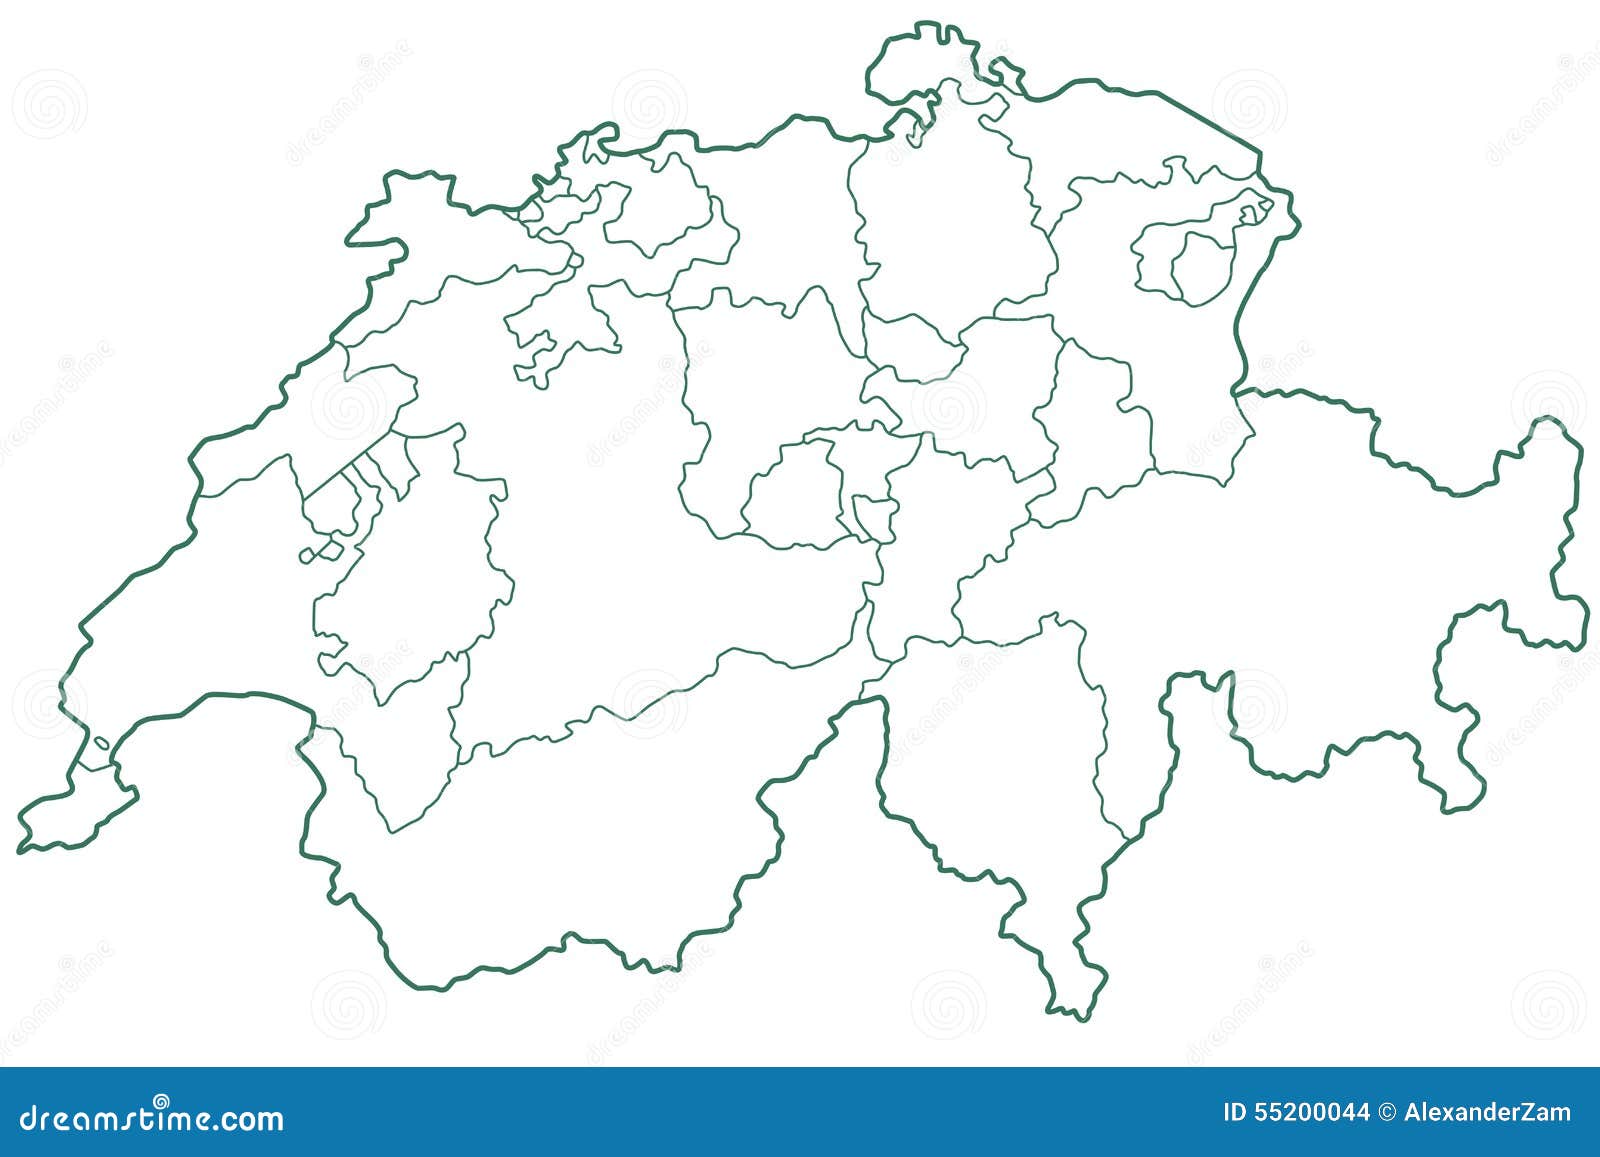 clipart map of switzerland - photo #7